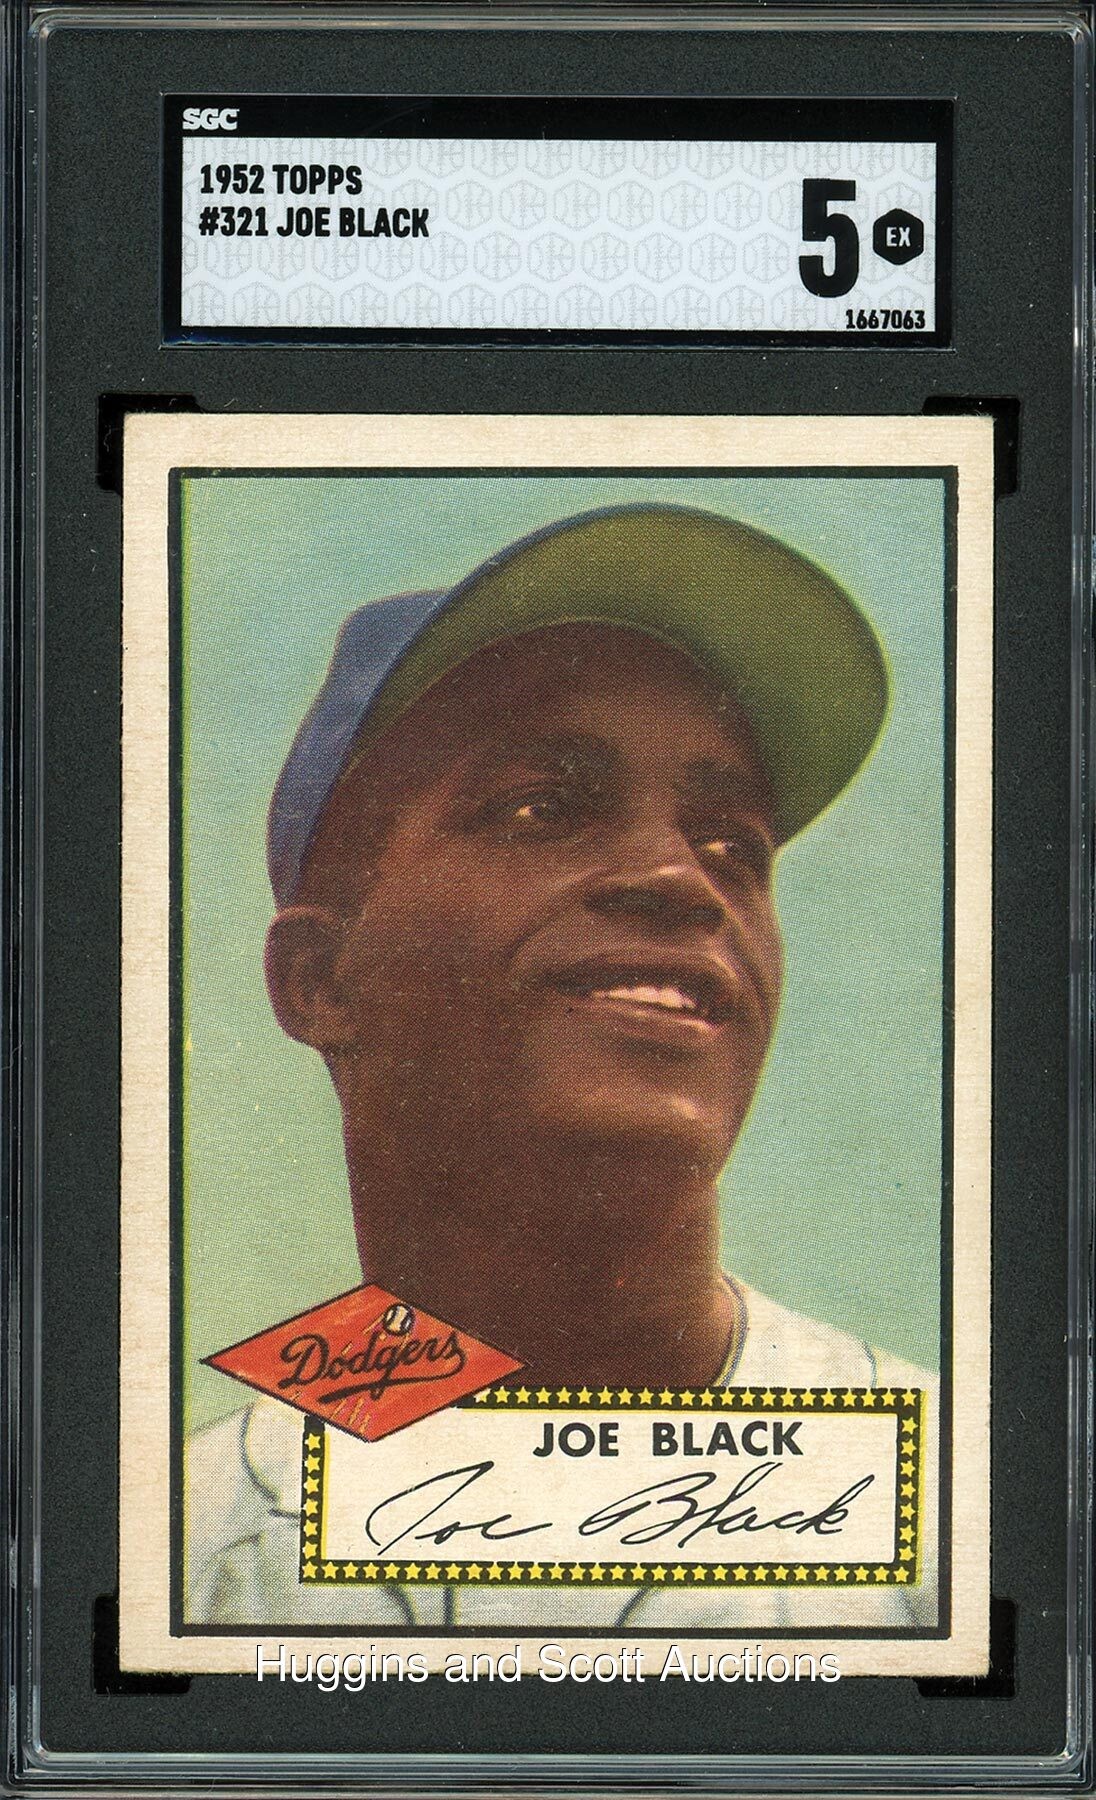 1952 Topps Baseball High Number #321 Joe Black Rookie - SGC 5 EX